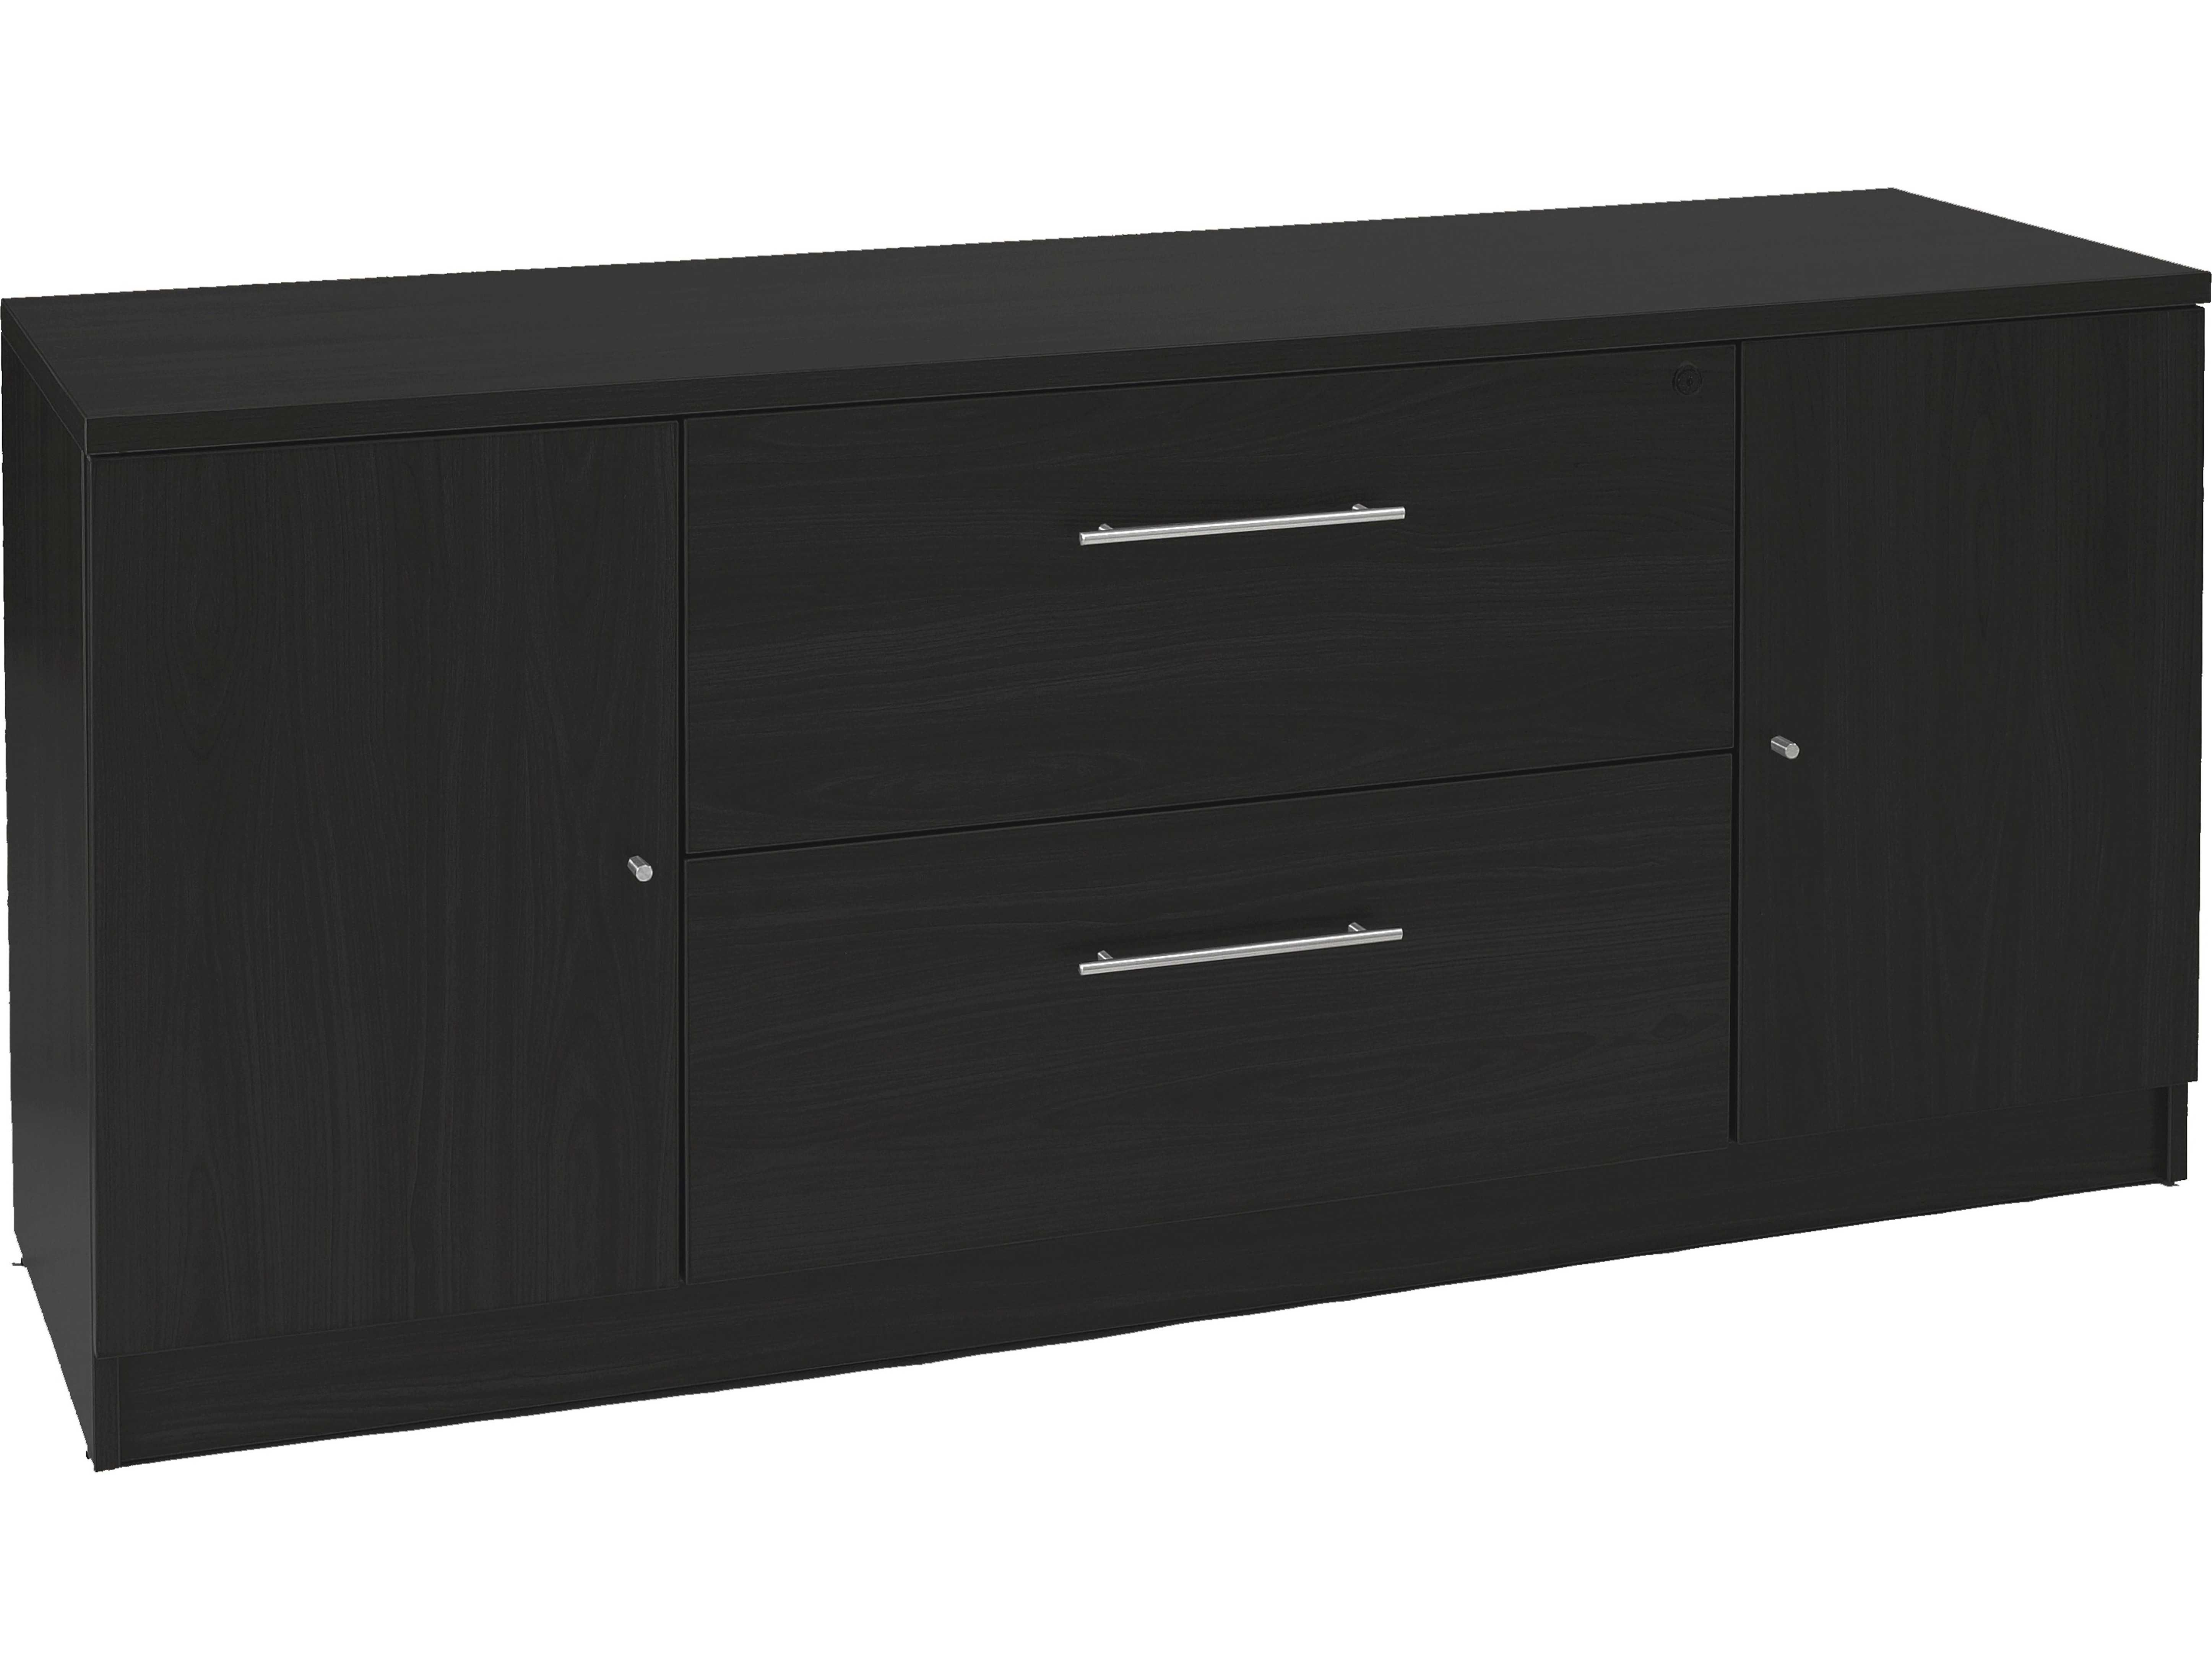 Unique Furniture 100 Series Espresso Credenza File Cabinet intended for proportions 5786 X 4341